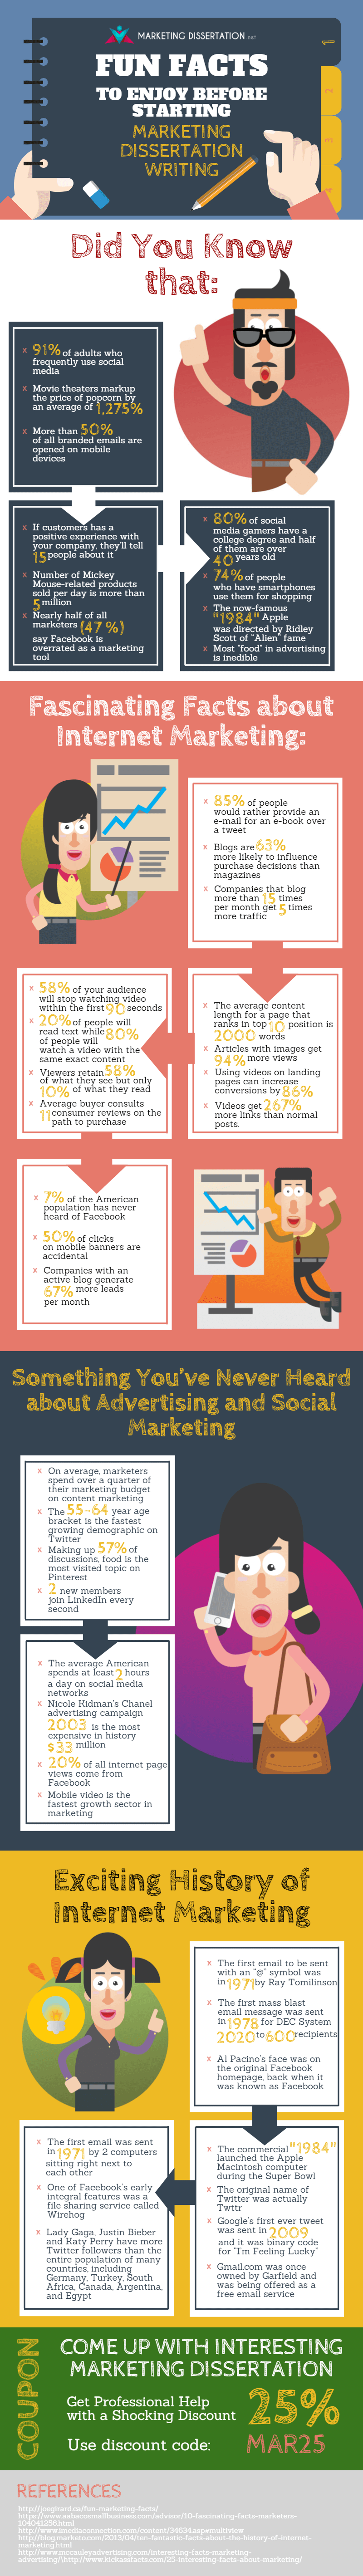 Fun Facts of Marketing